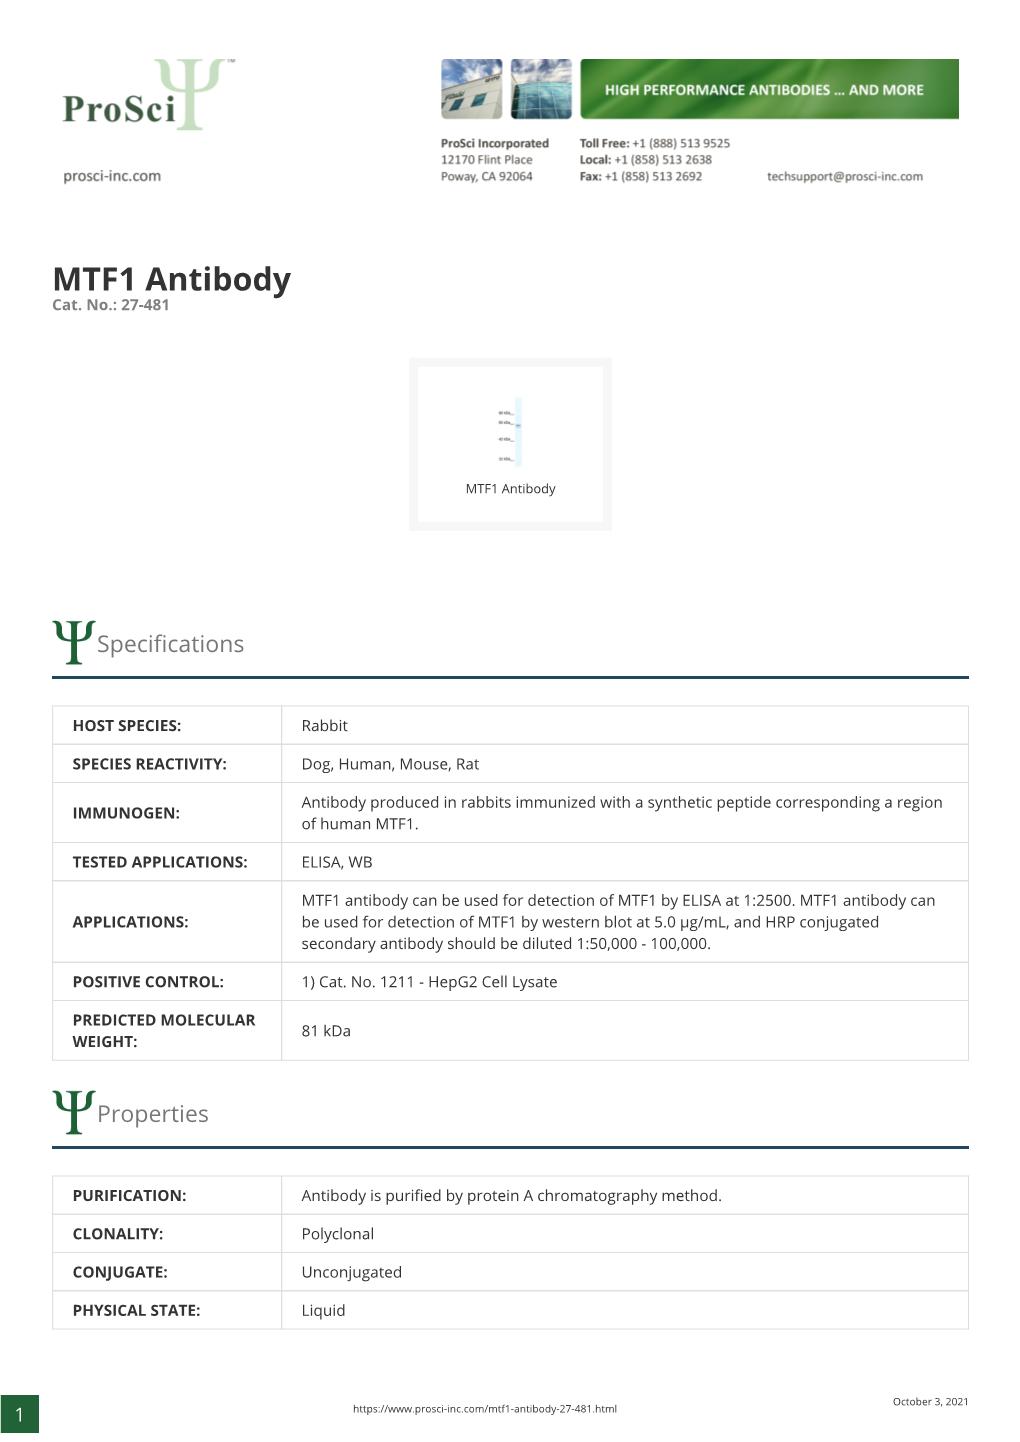 MTF1 Antibody Cat